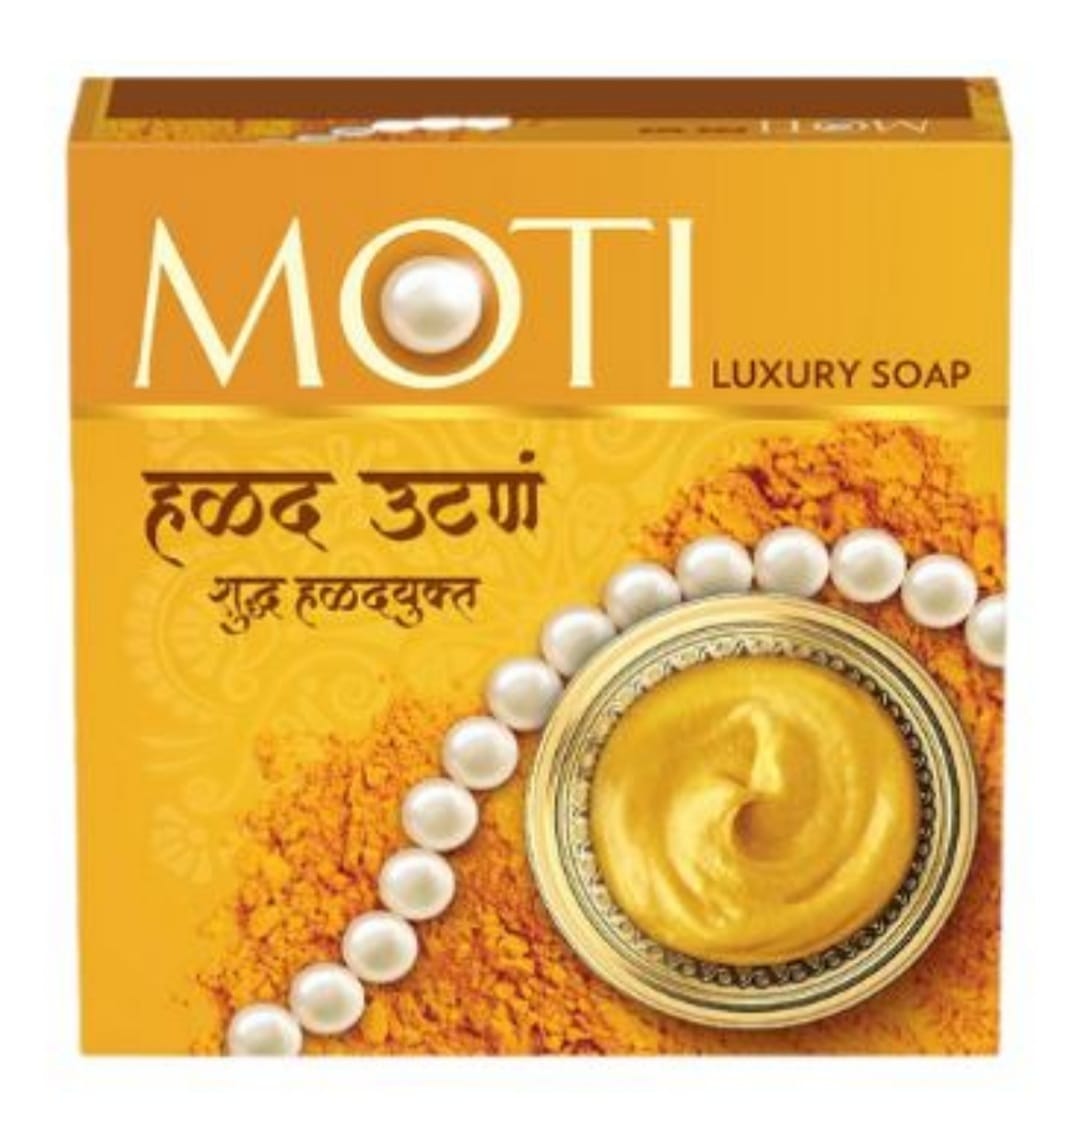 Moti haldi Luxury Soap/Moti Turmeric Luxury Soap